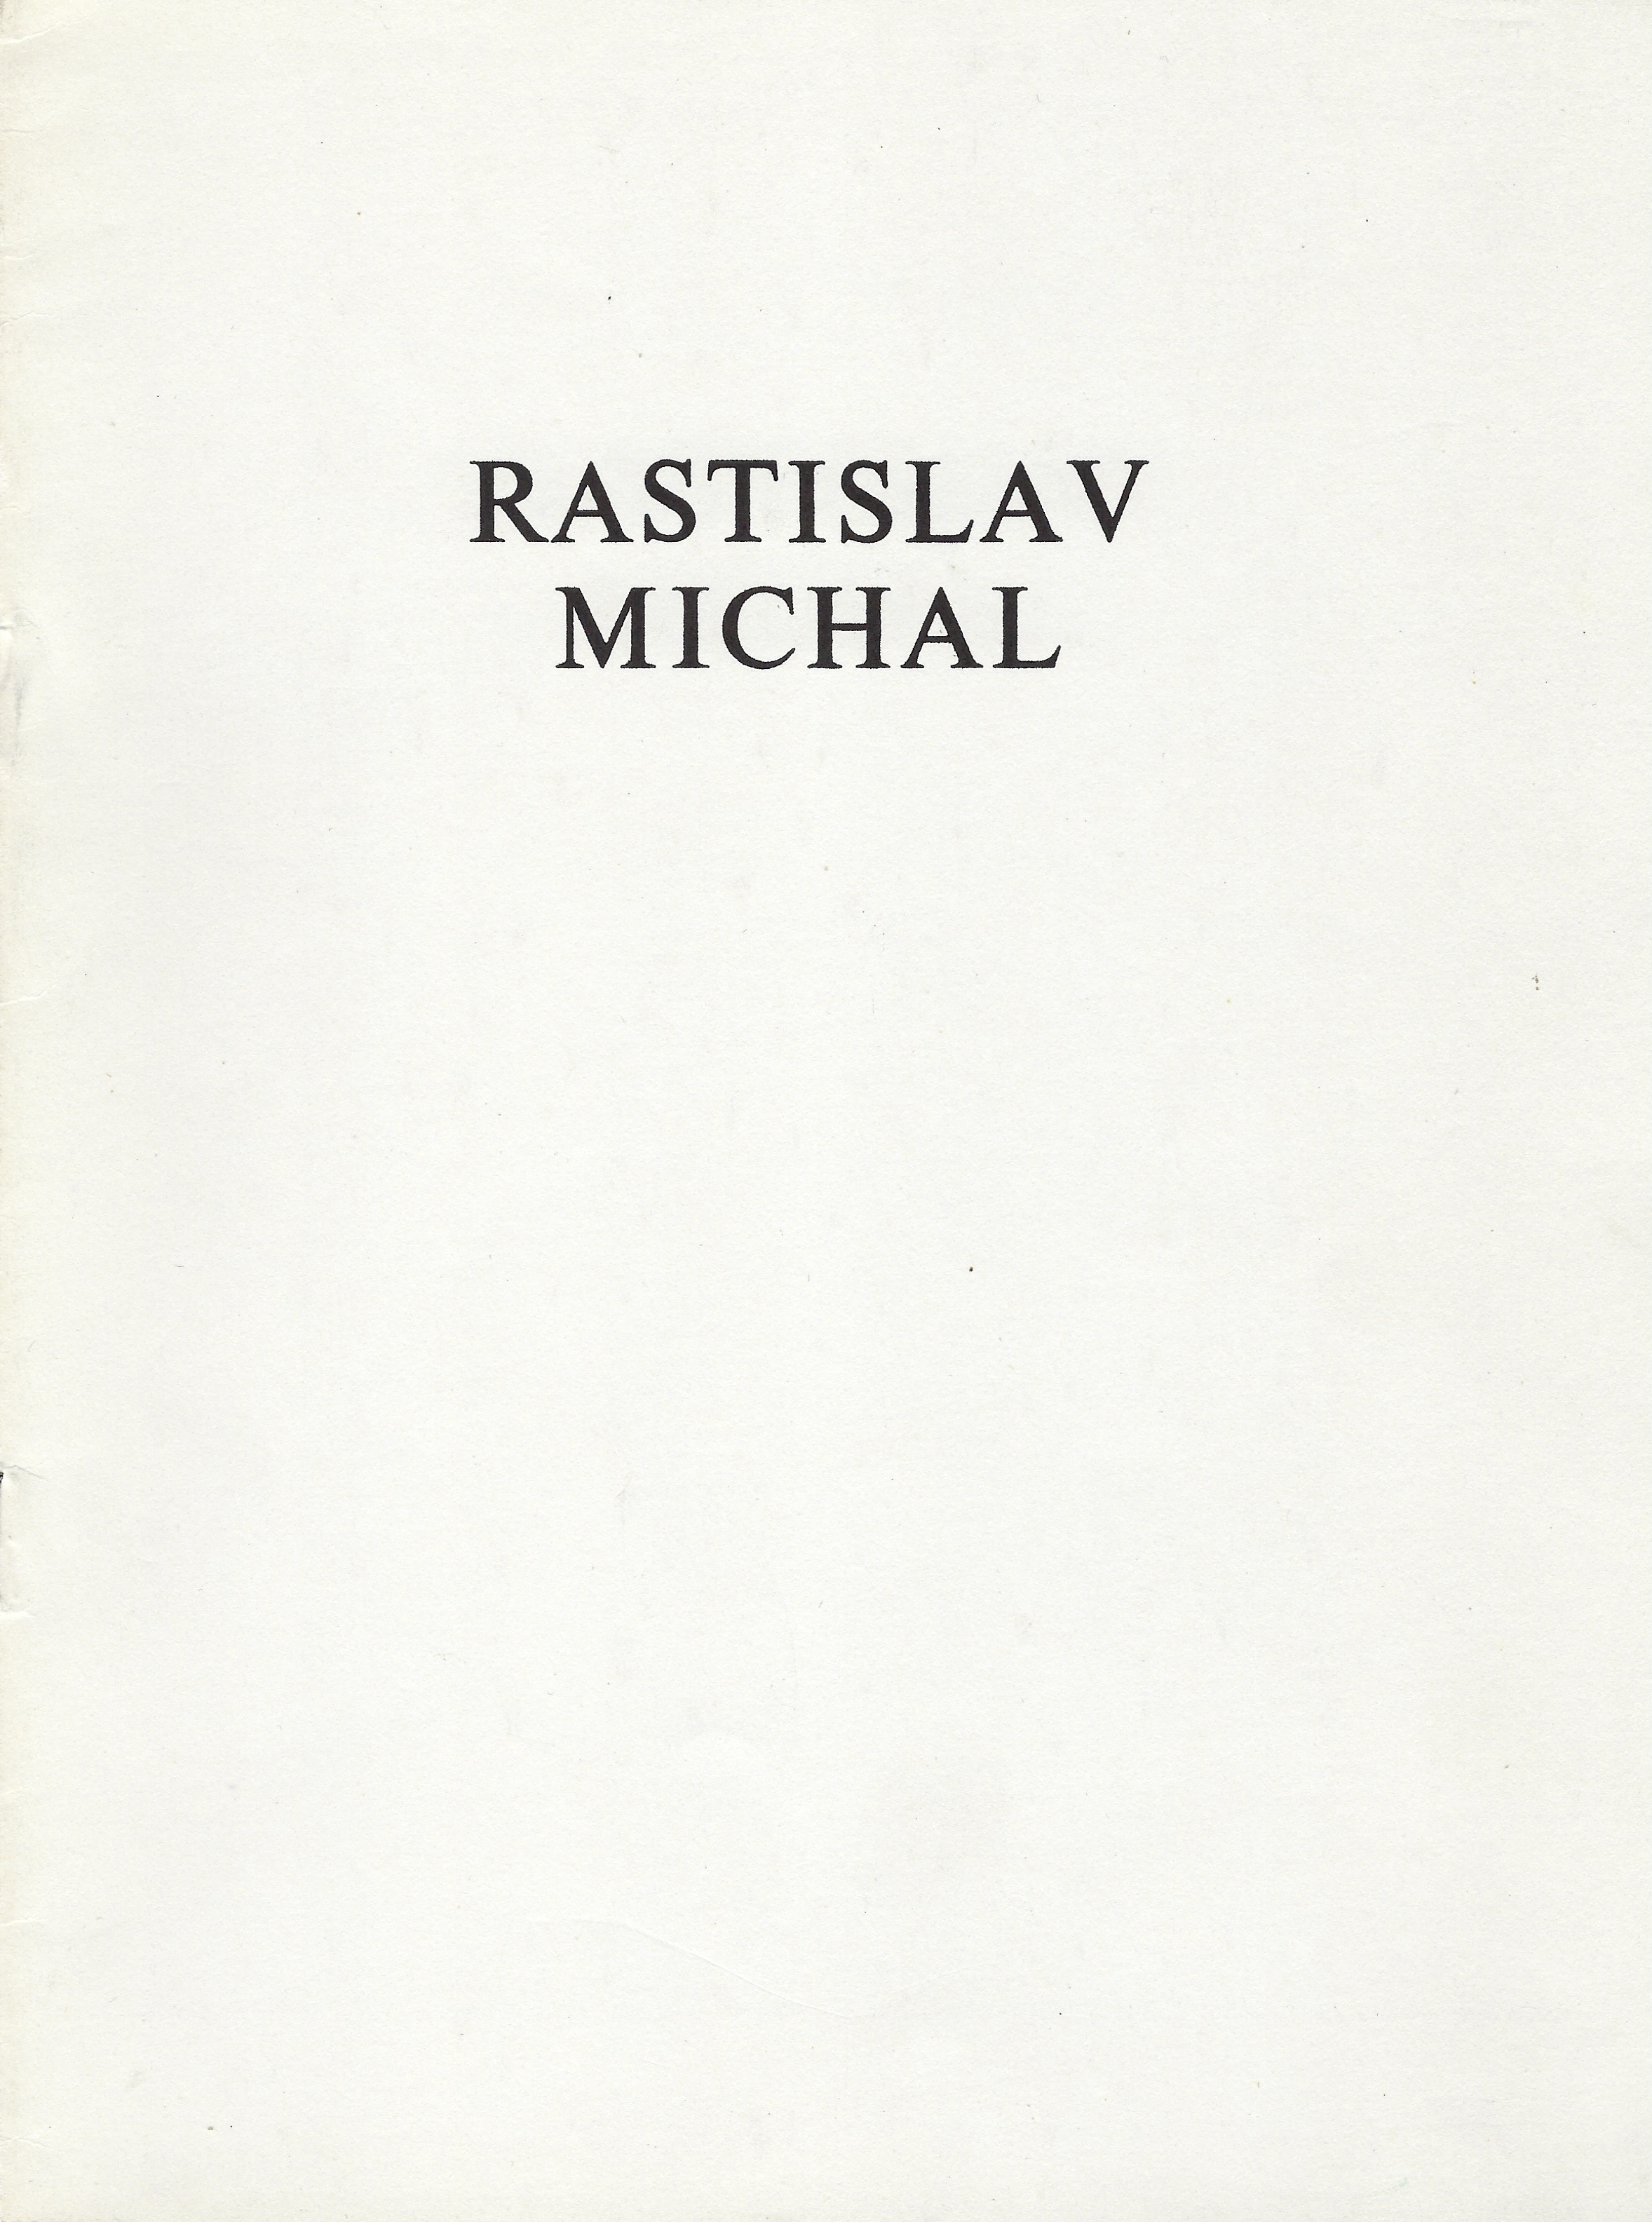 Rastislav Michal